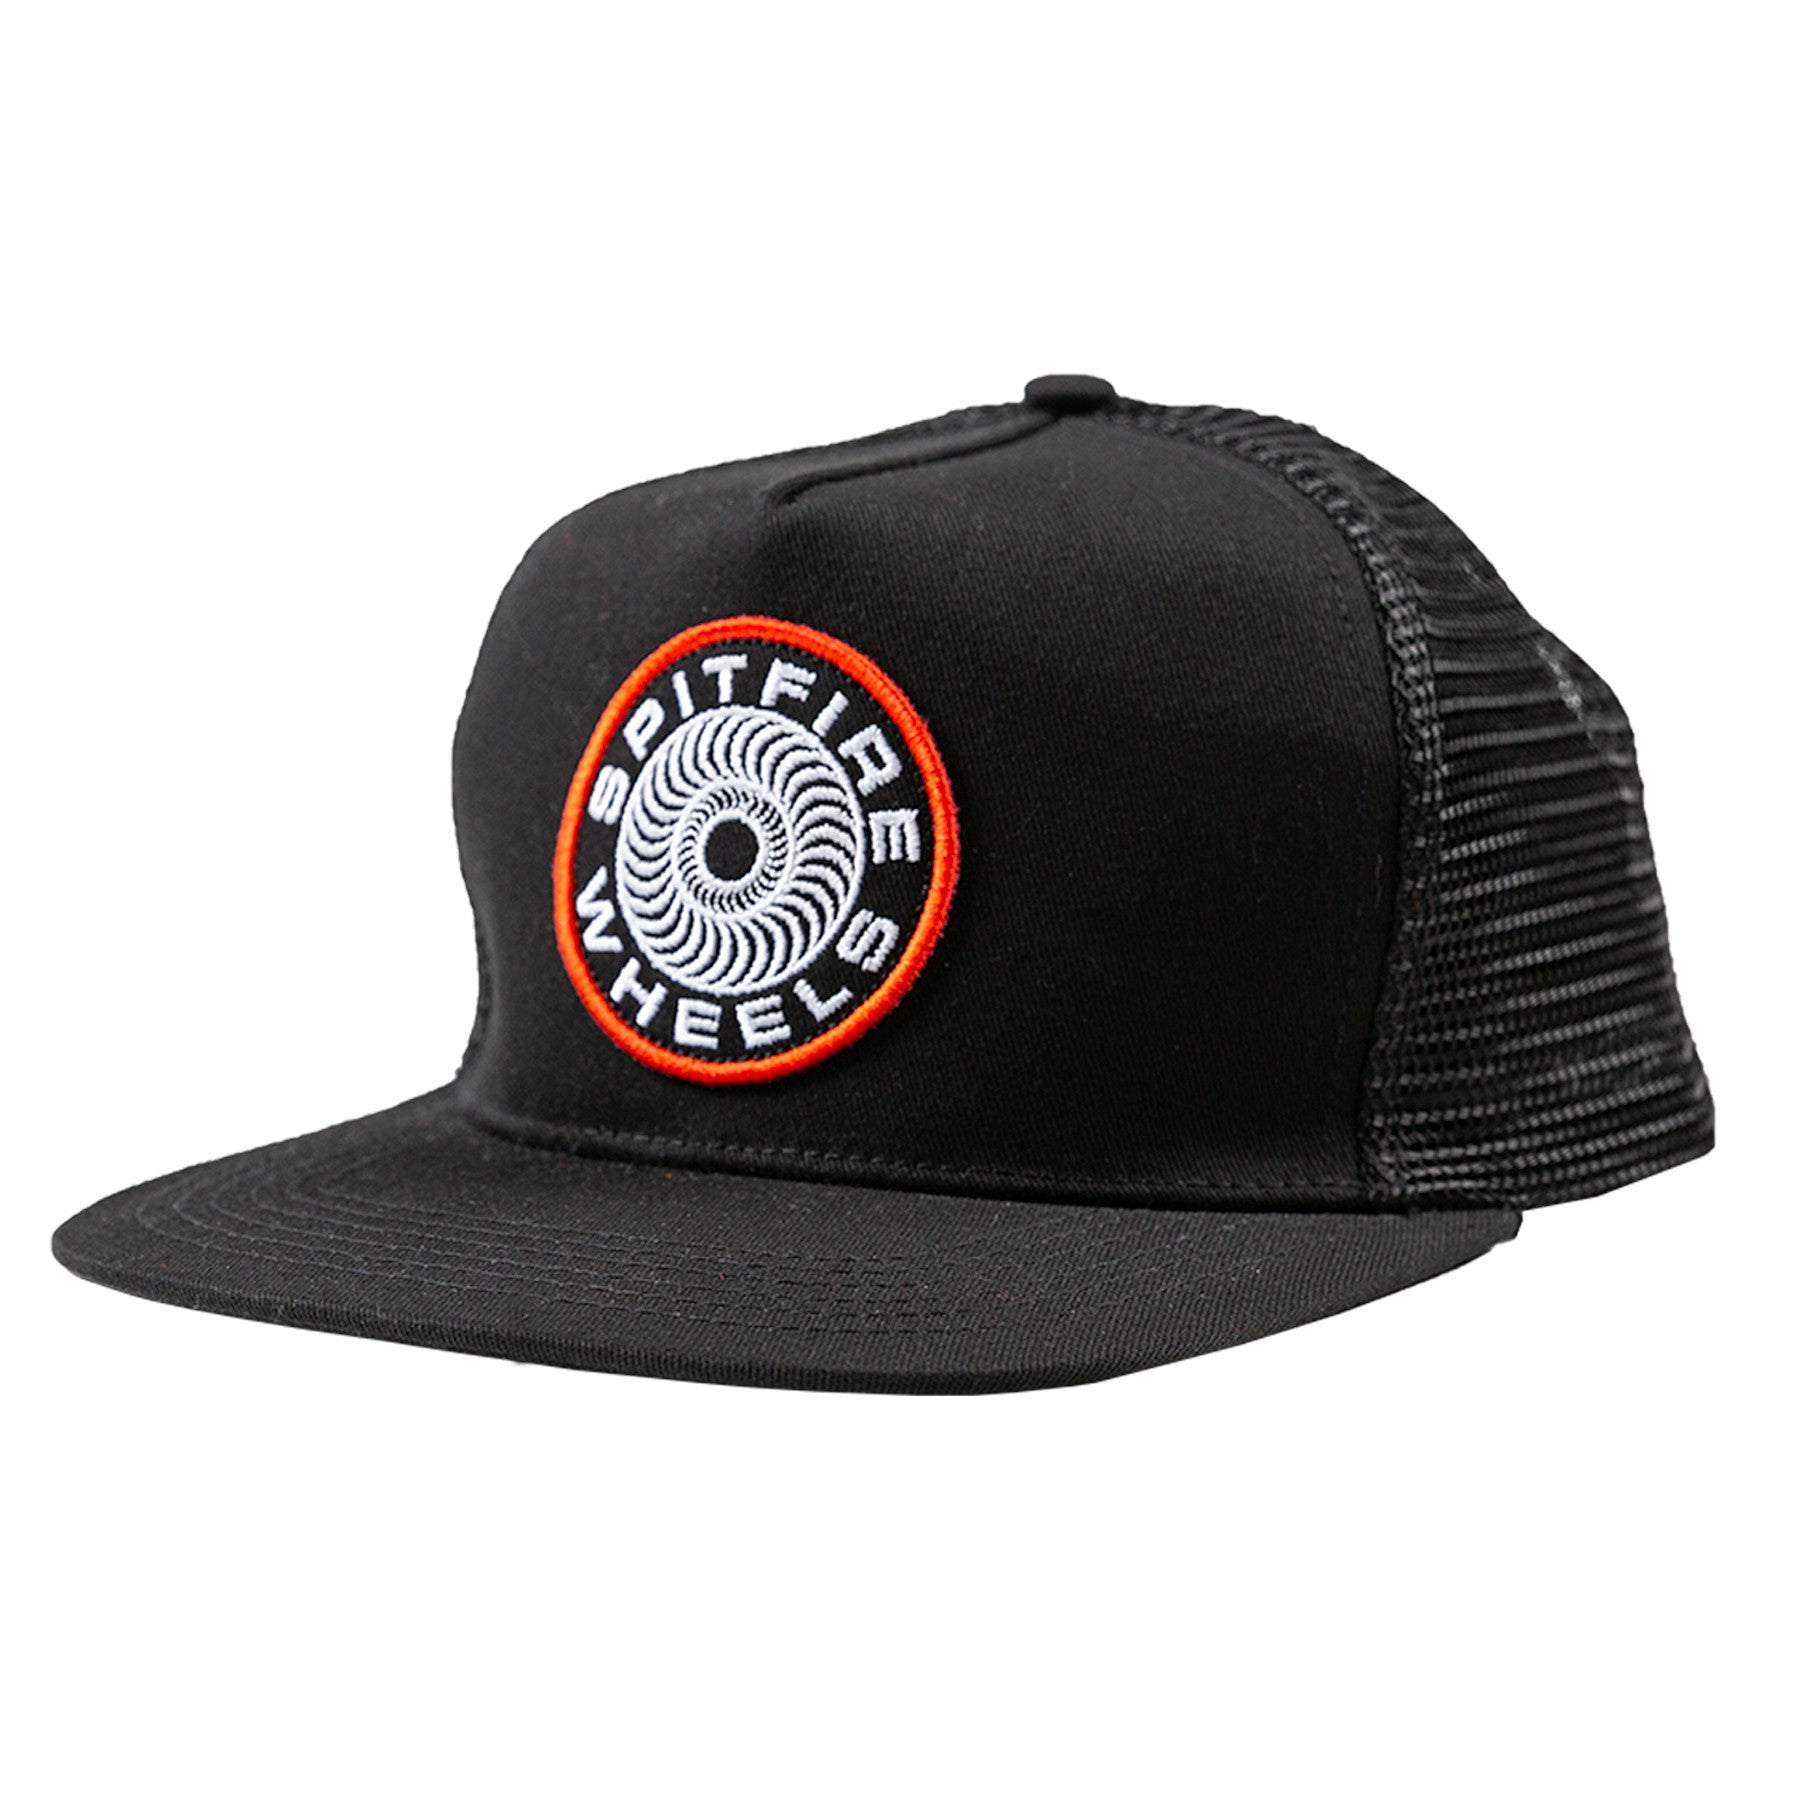 Black Classic 87' Mesh Spitfire Trucker Snapback Hat